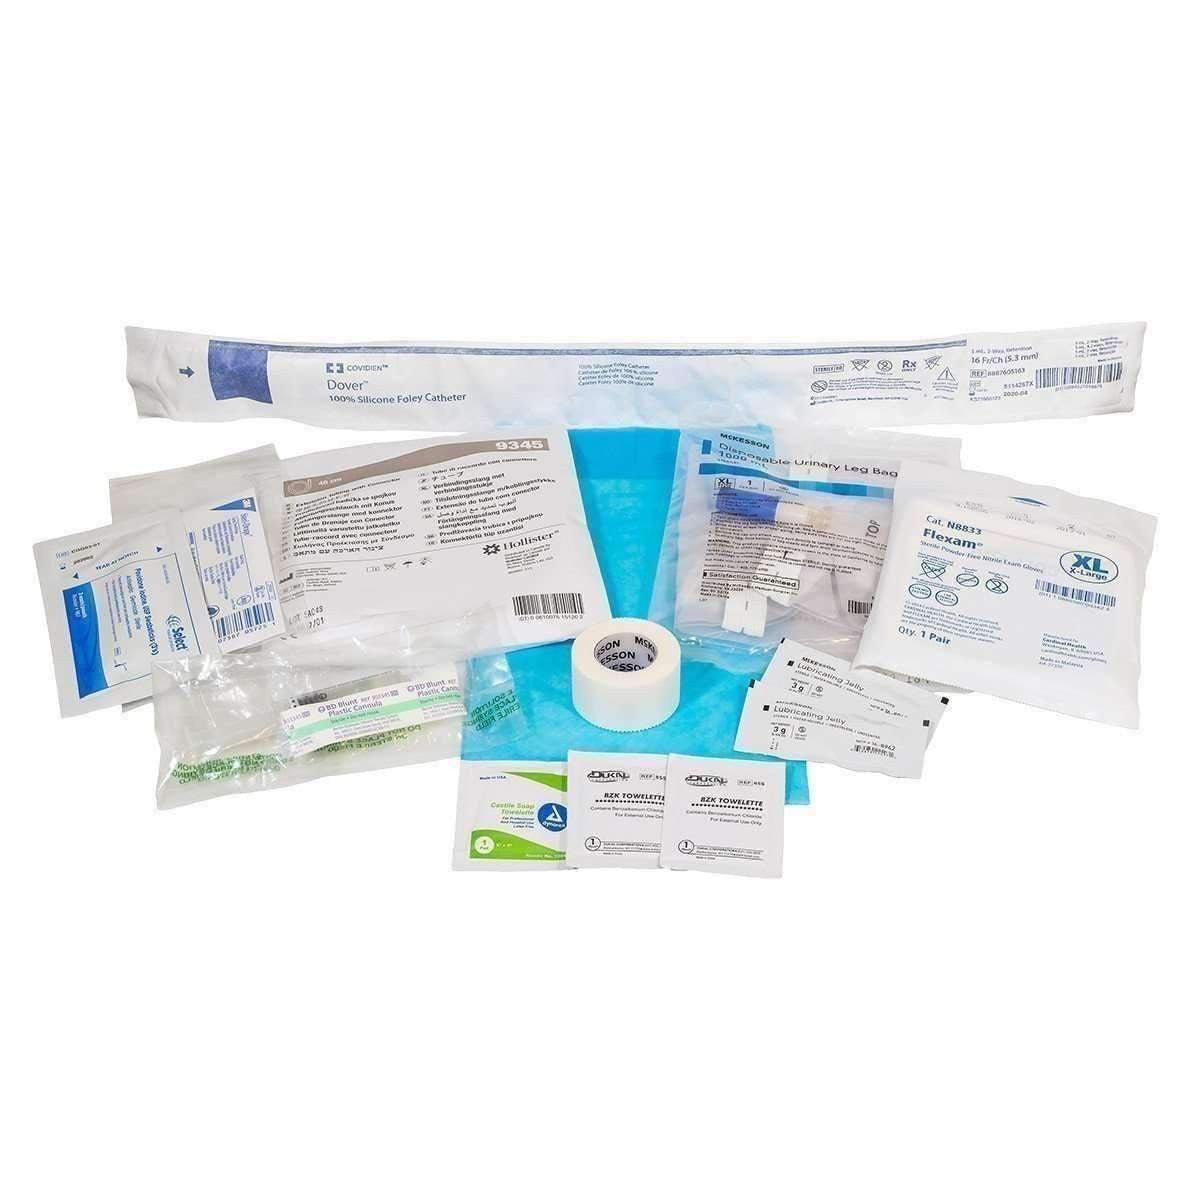 TACMED™ Foley Catheter Kit - Vendor